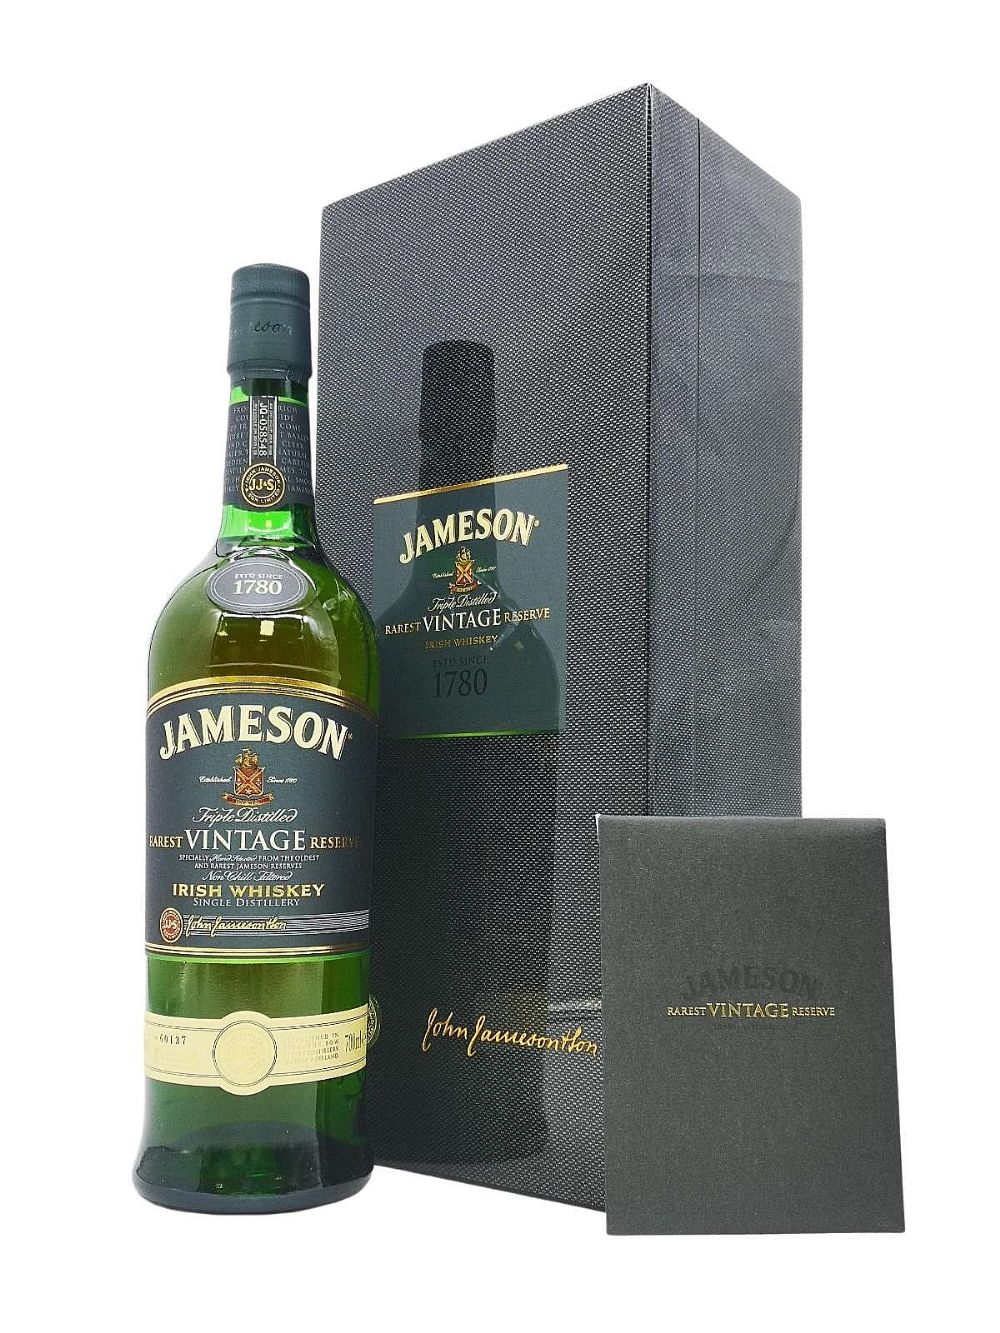 Jameson Rarest Vintage Reserve 2007 (graphite box)